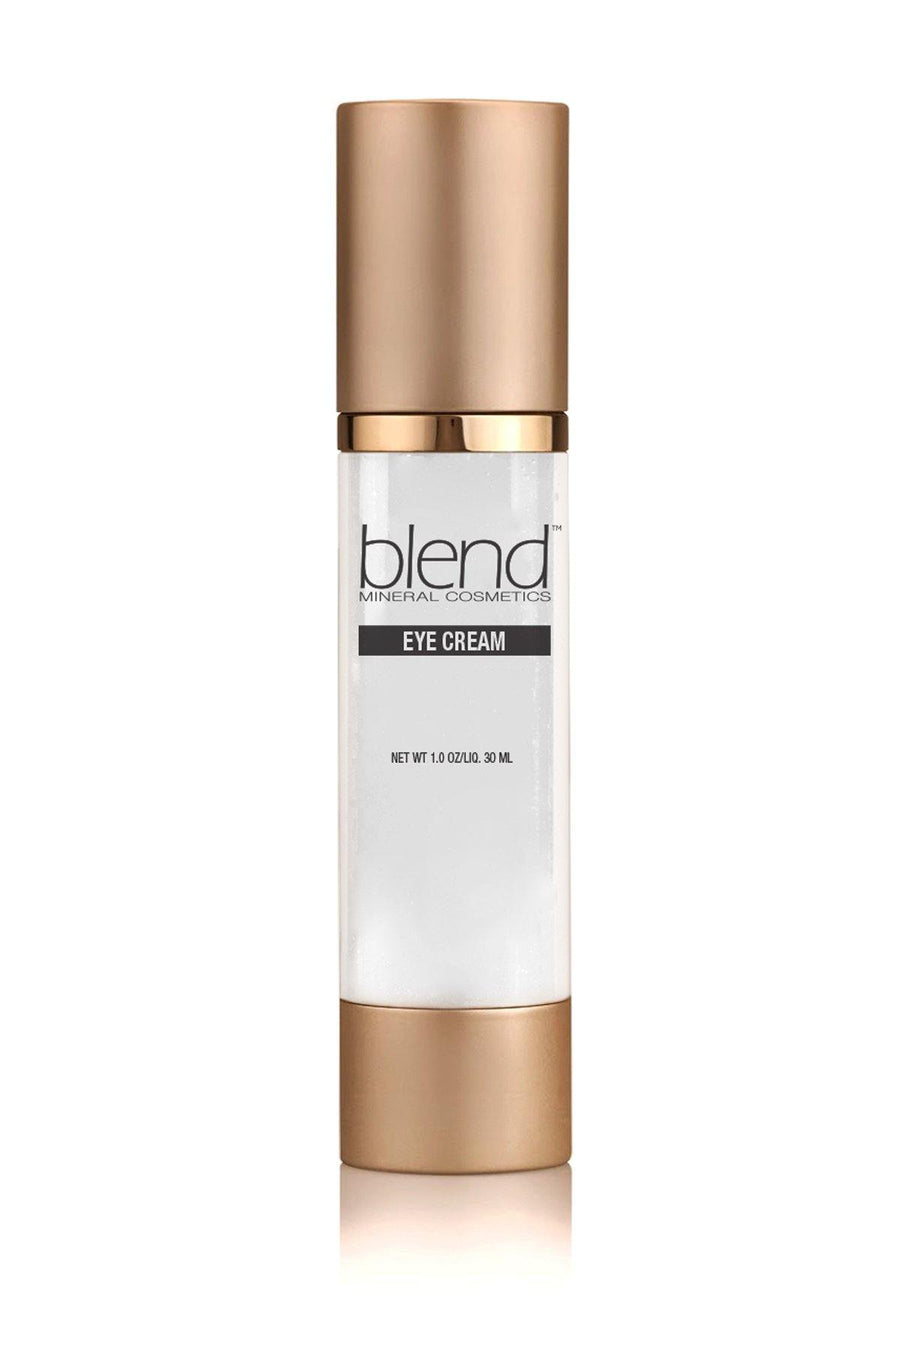 Eye Cream - Blend Mineral Cosmetics